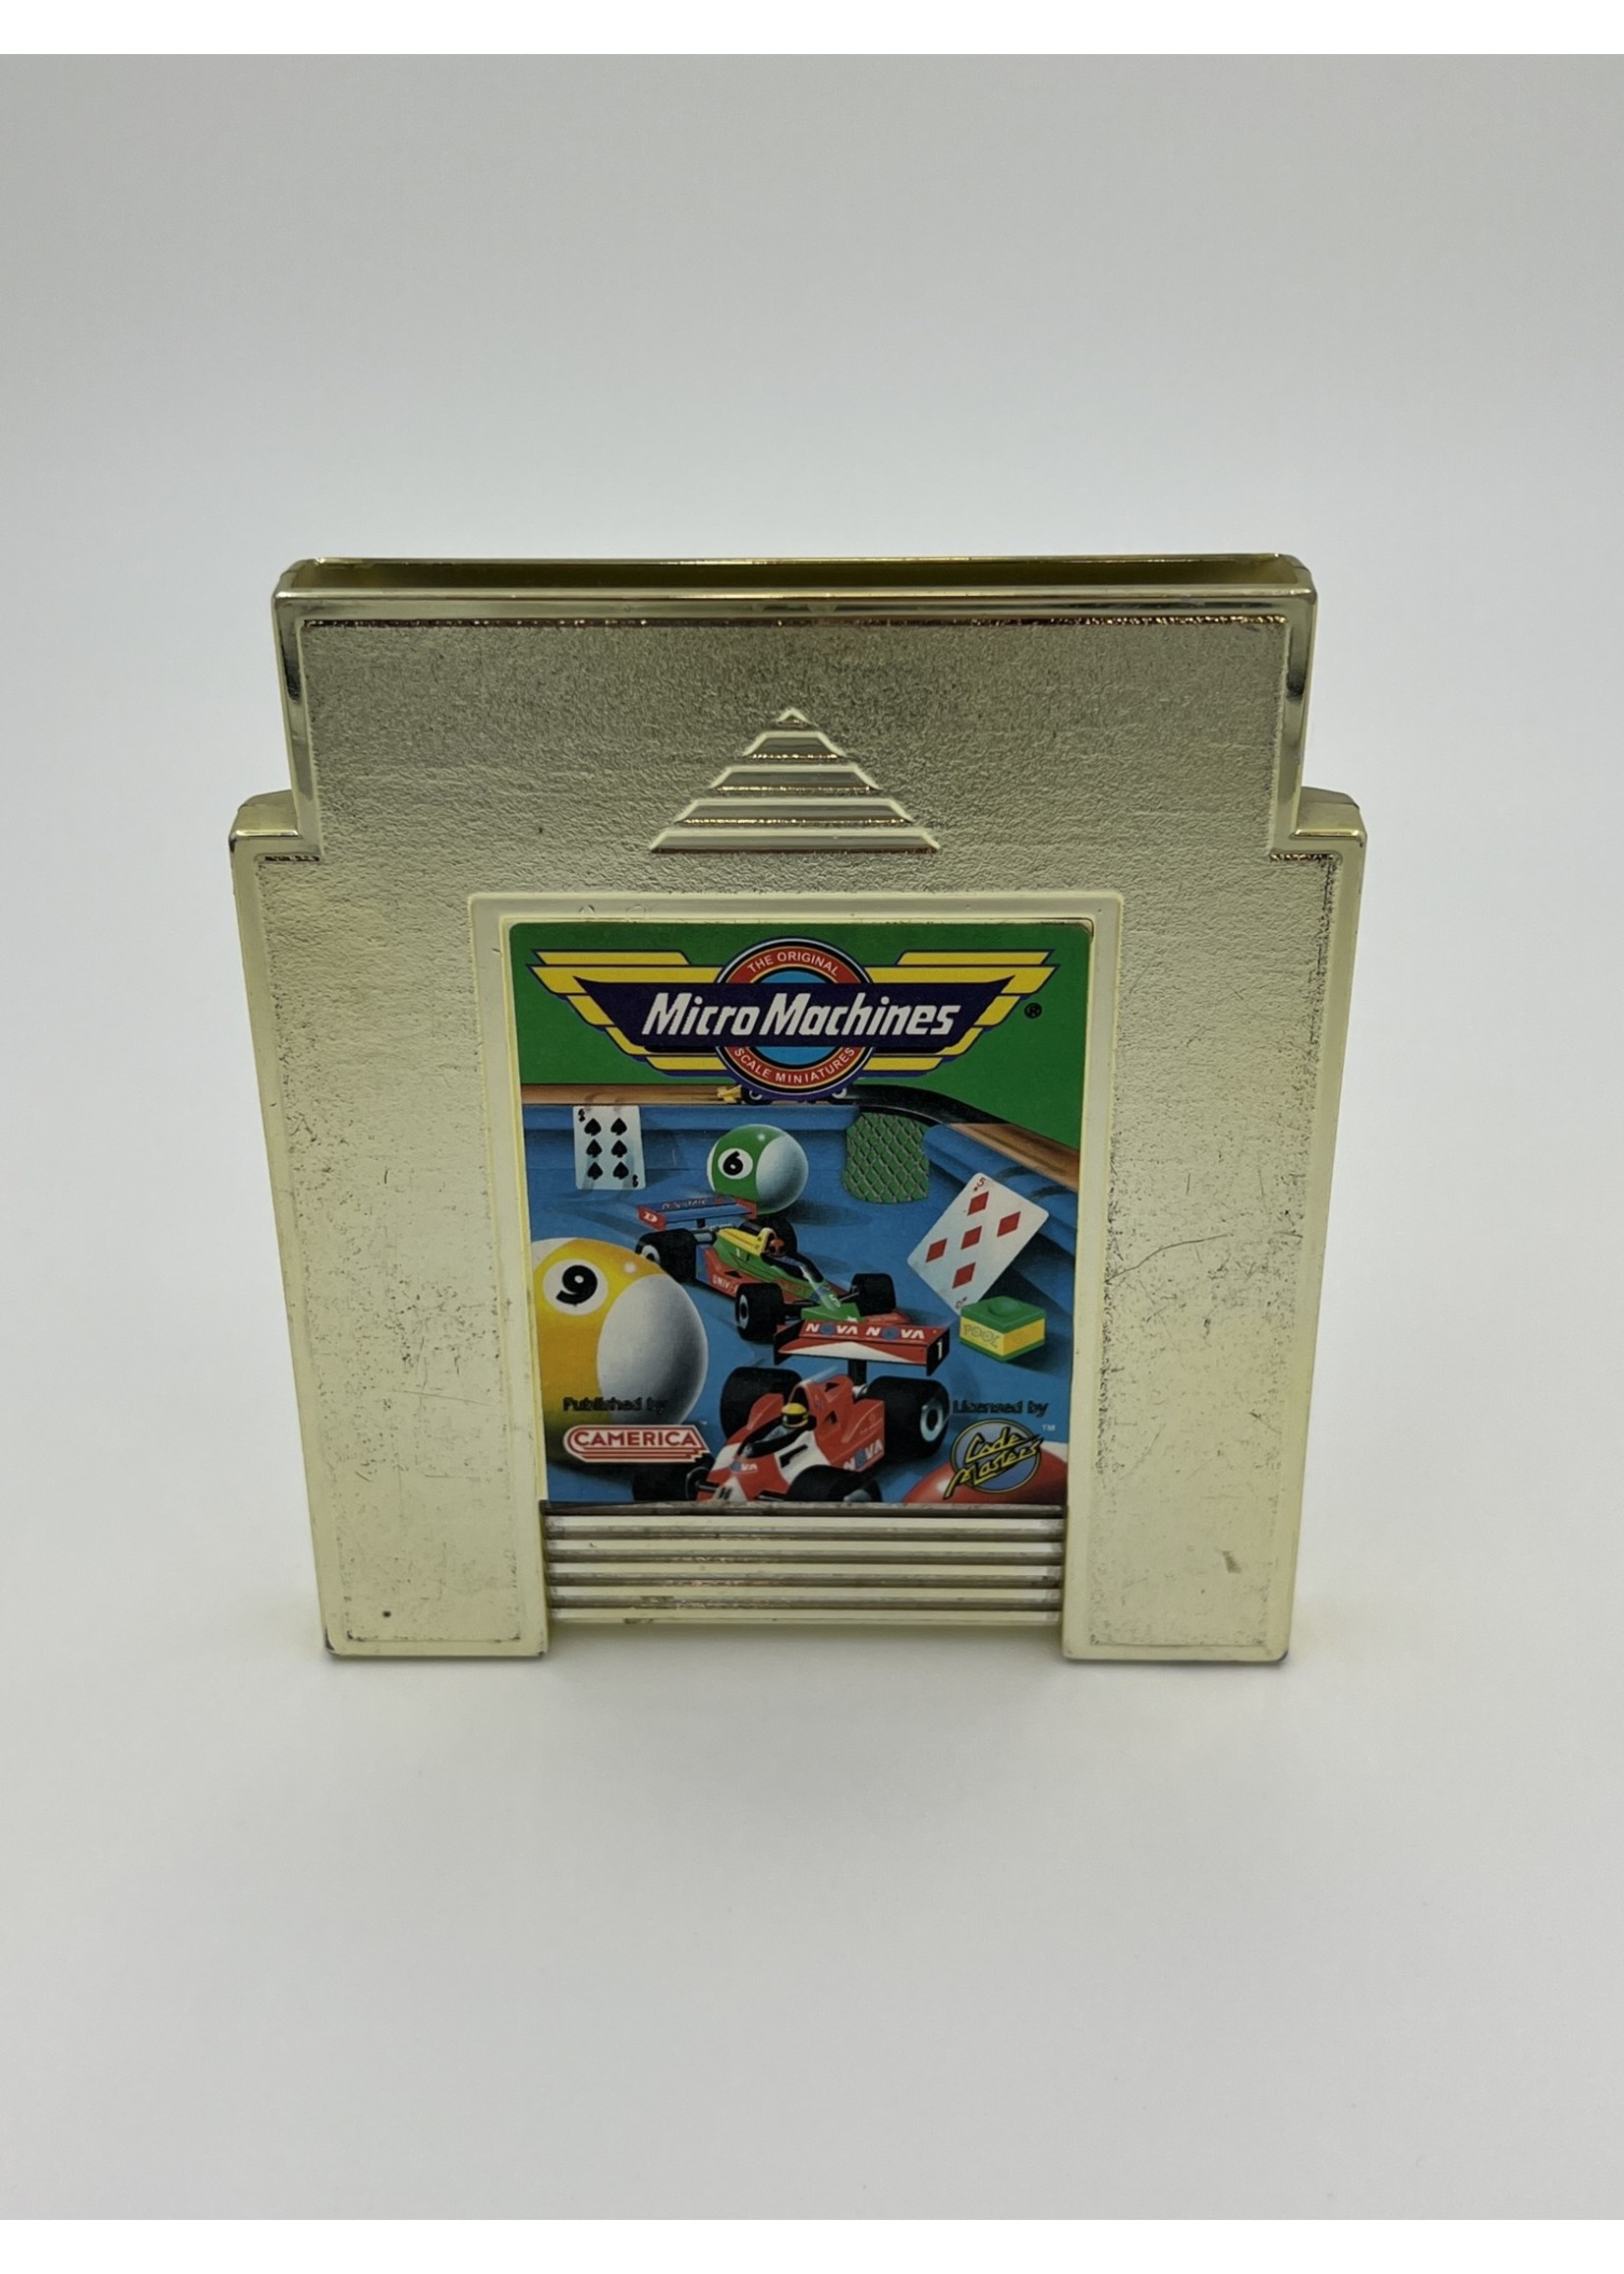 Nintendo Micro Machines Nes